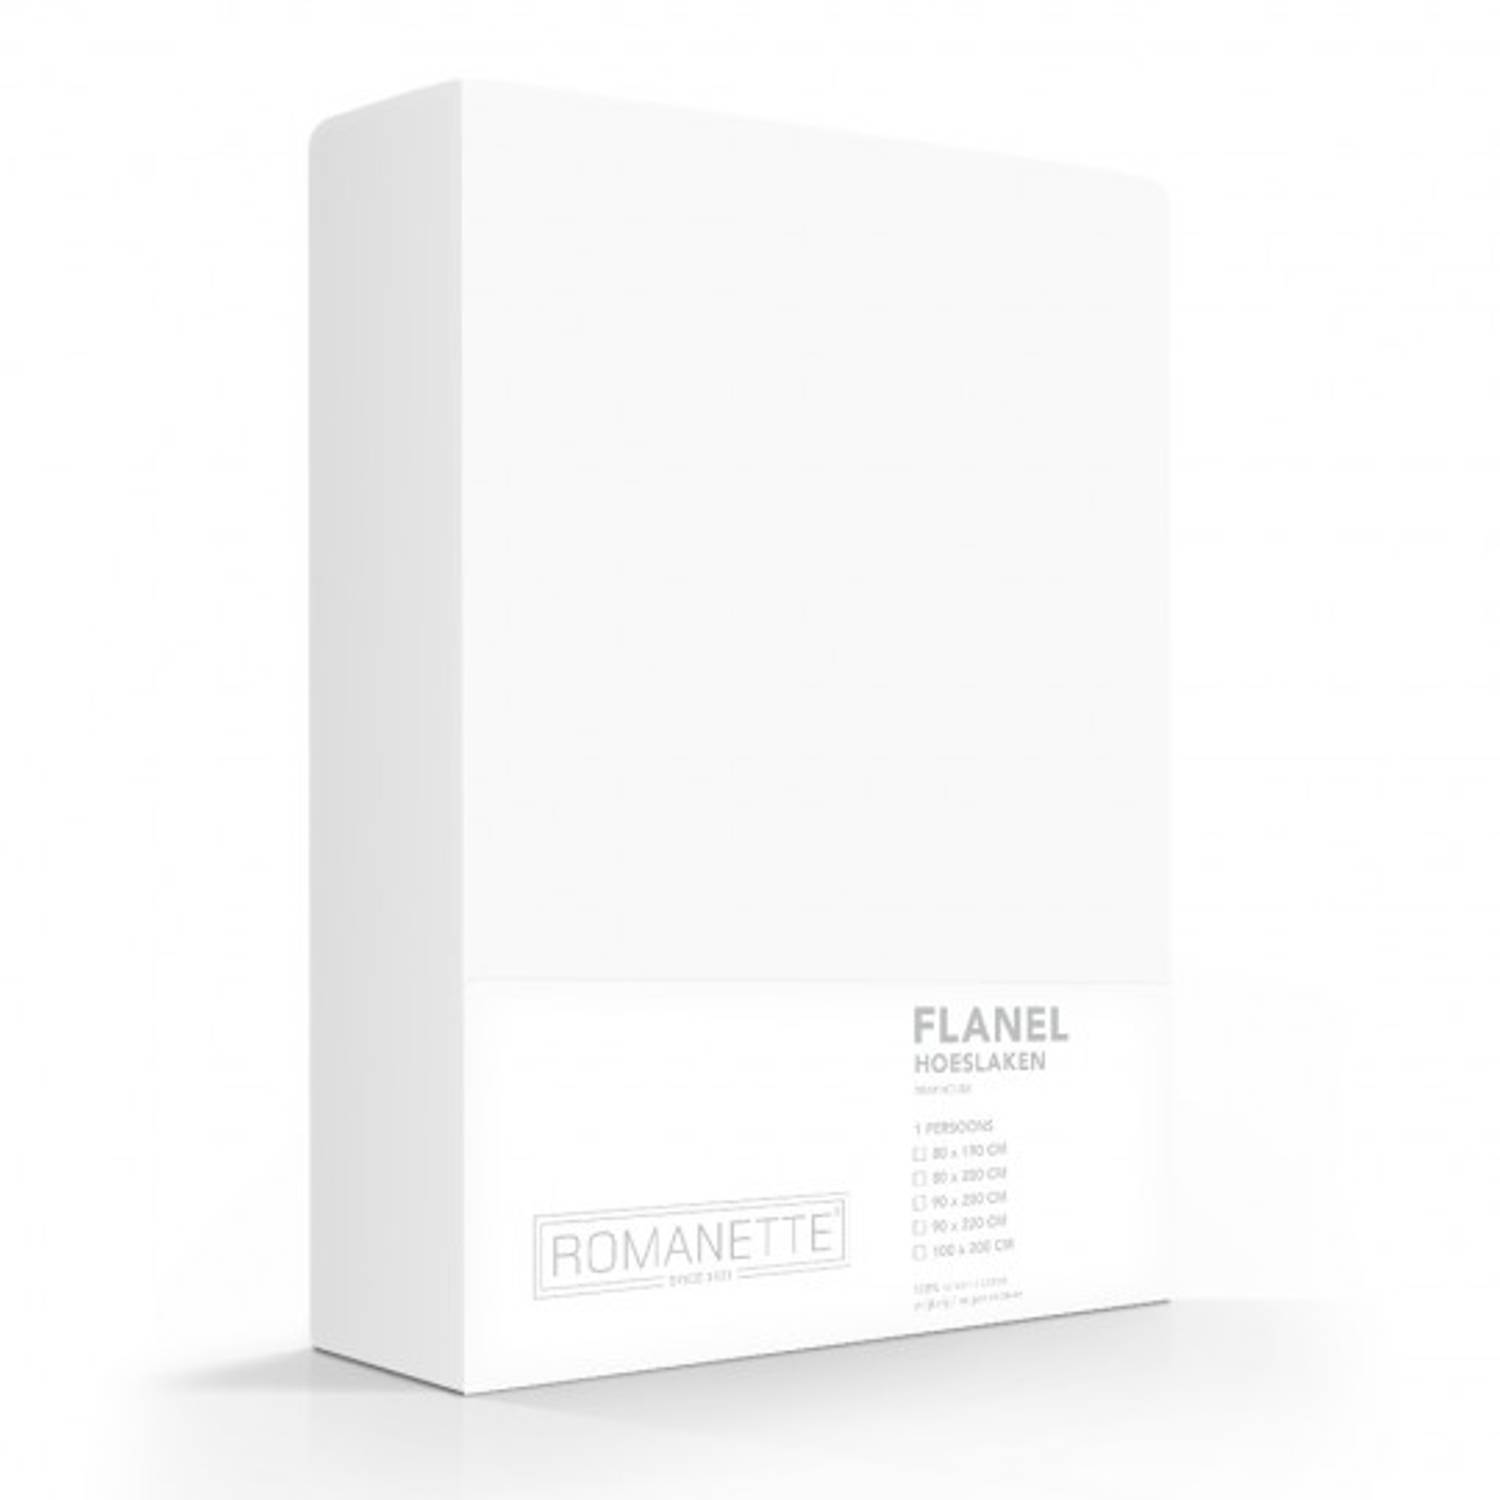 Flanellen Hoeslaken Wit Romanette-90 X 200 Cm